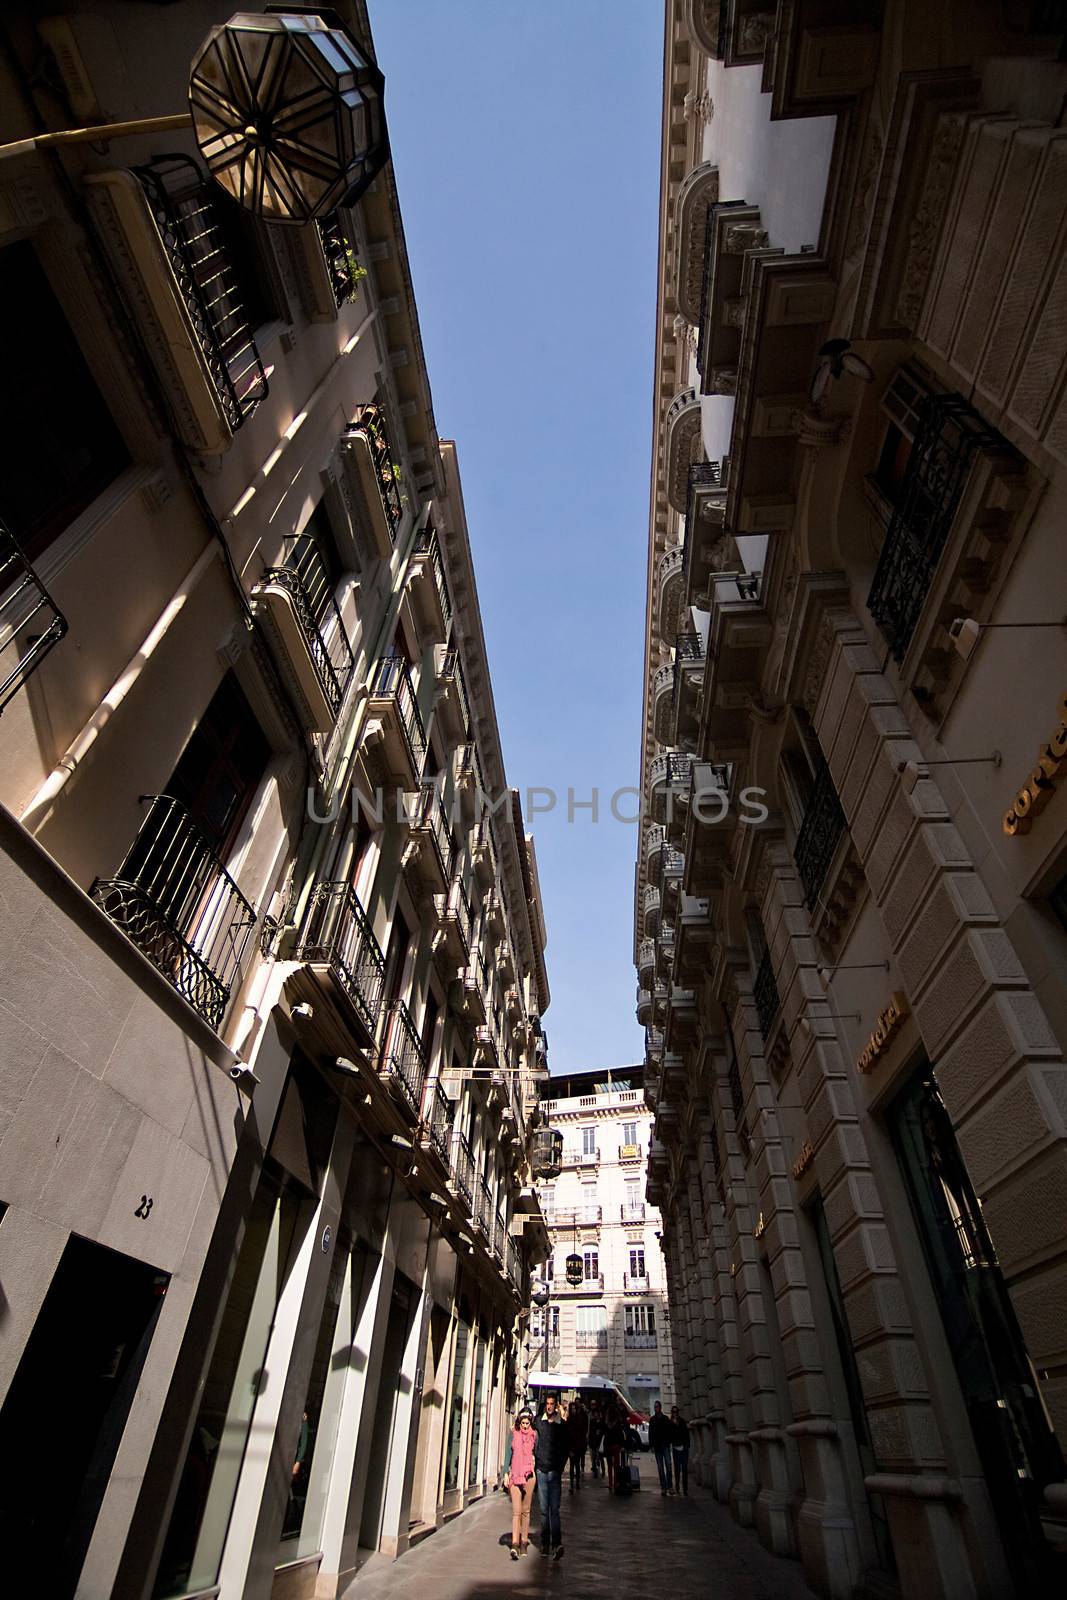 Street of Granada, Spain by digicomphoto